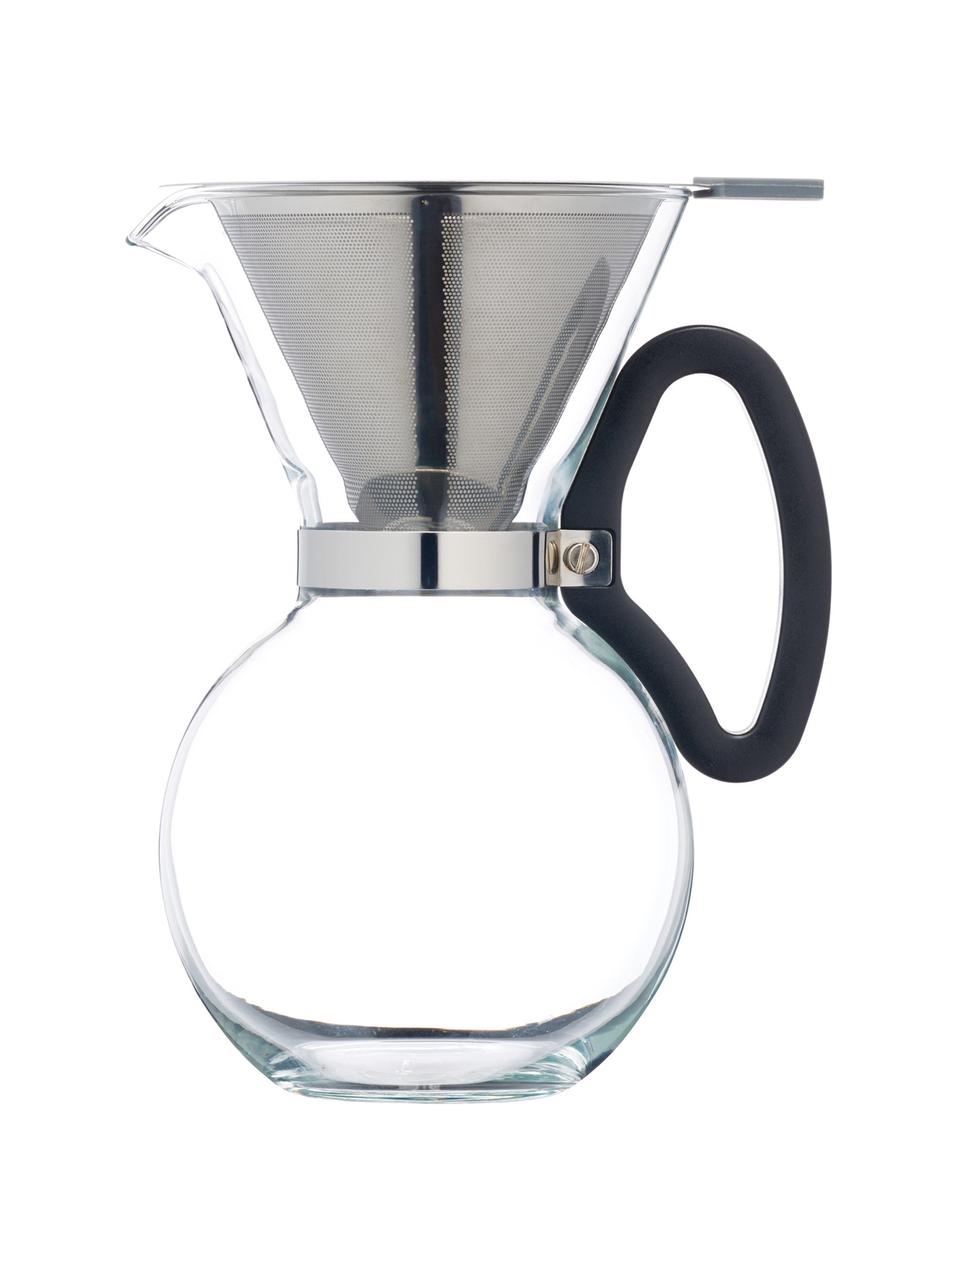 Cafetière Daisy van glas met afneembare filter, Pot: borosilicaatglas, Filter en bevestiging: edelstaal, Transparant, edelstaalkleurig, Ø 15 x H 23 cm